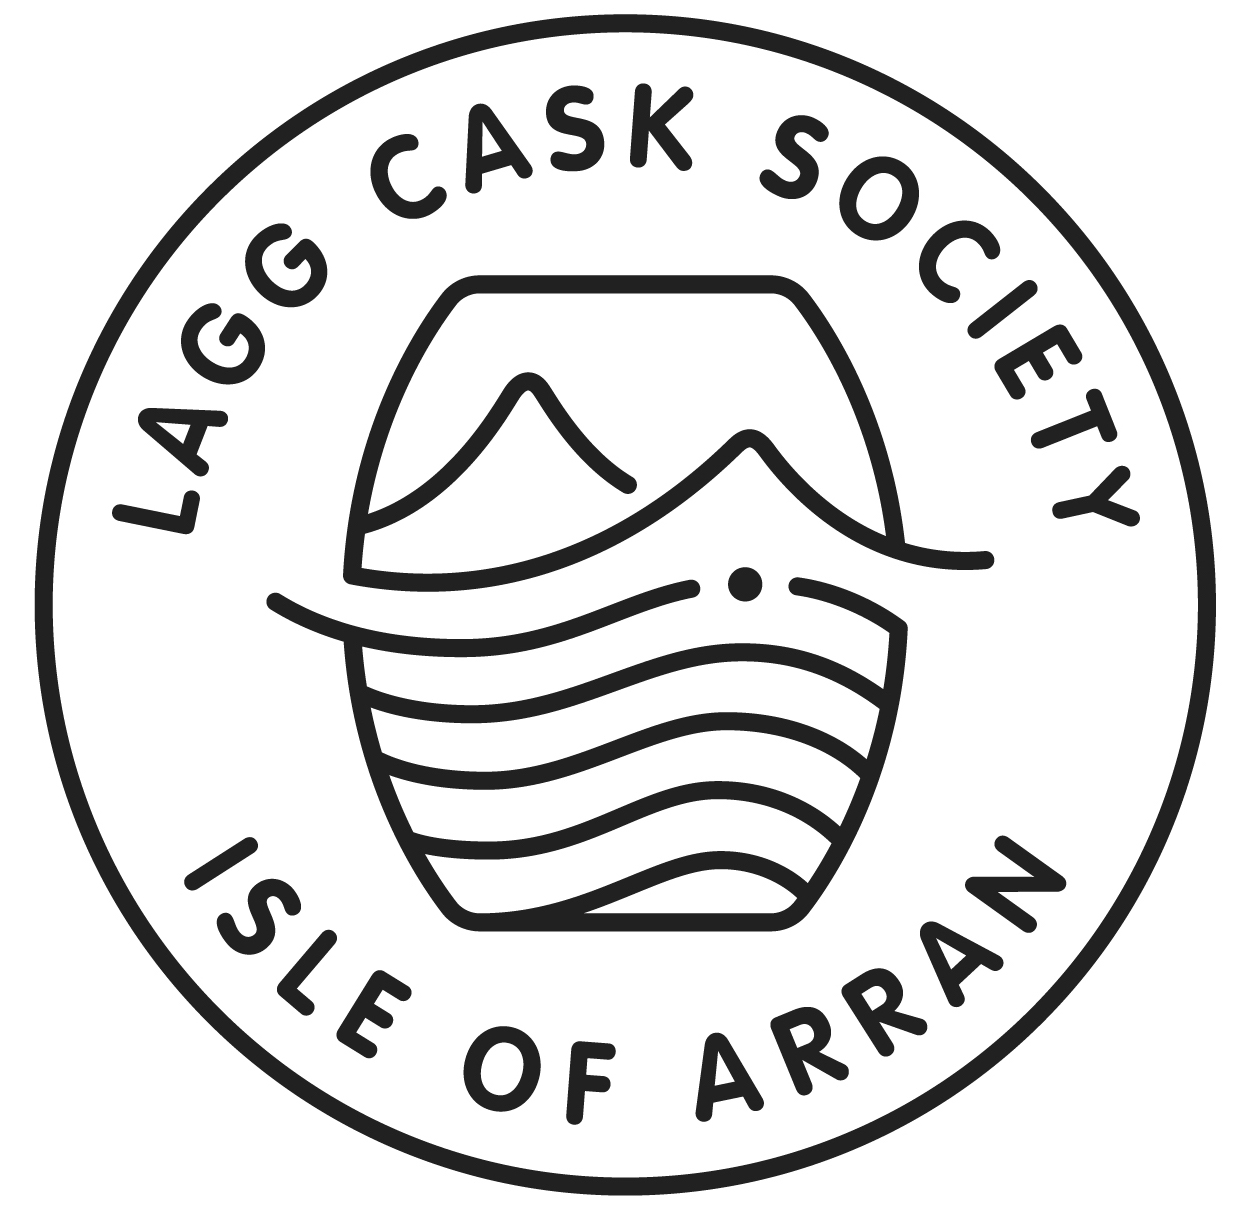 Lagg Cask Society Logo Cropped